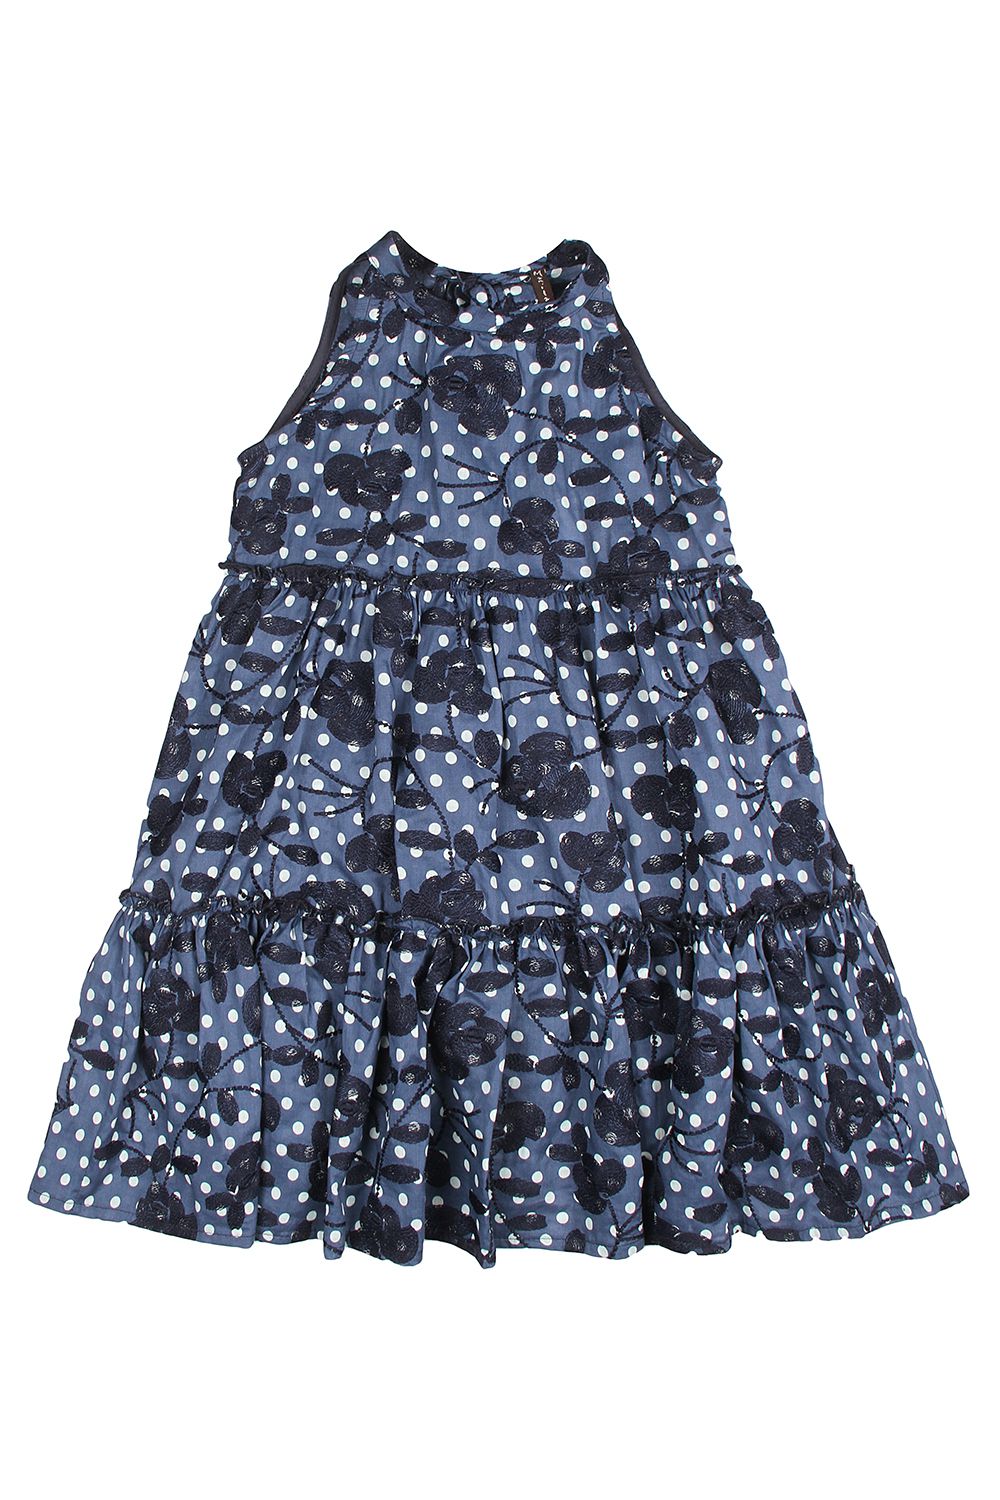 Платье Manila Grace, размер 128, цвет синий MG135 - фото 1